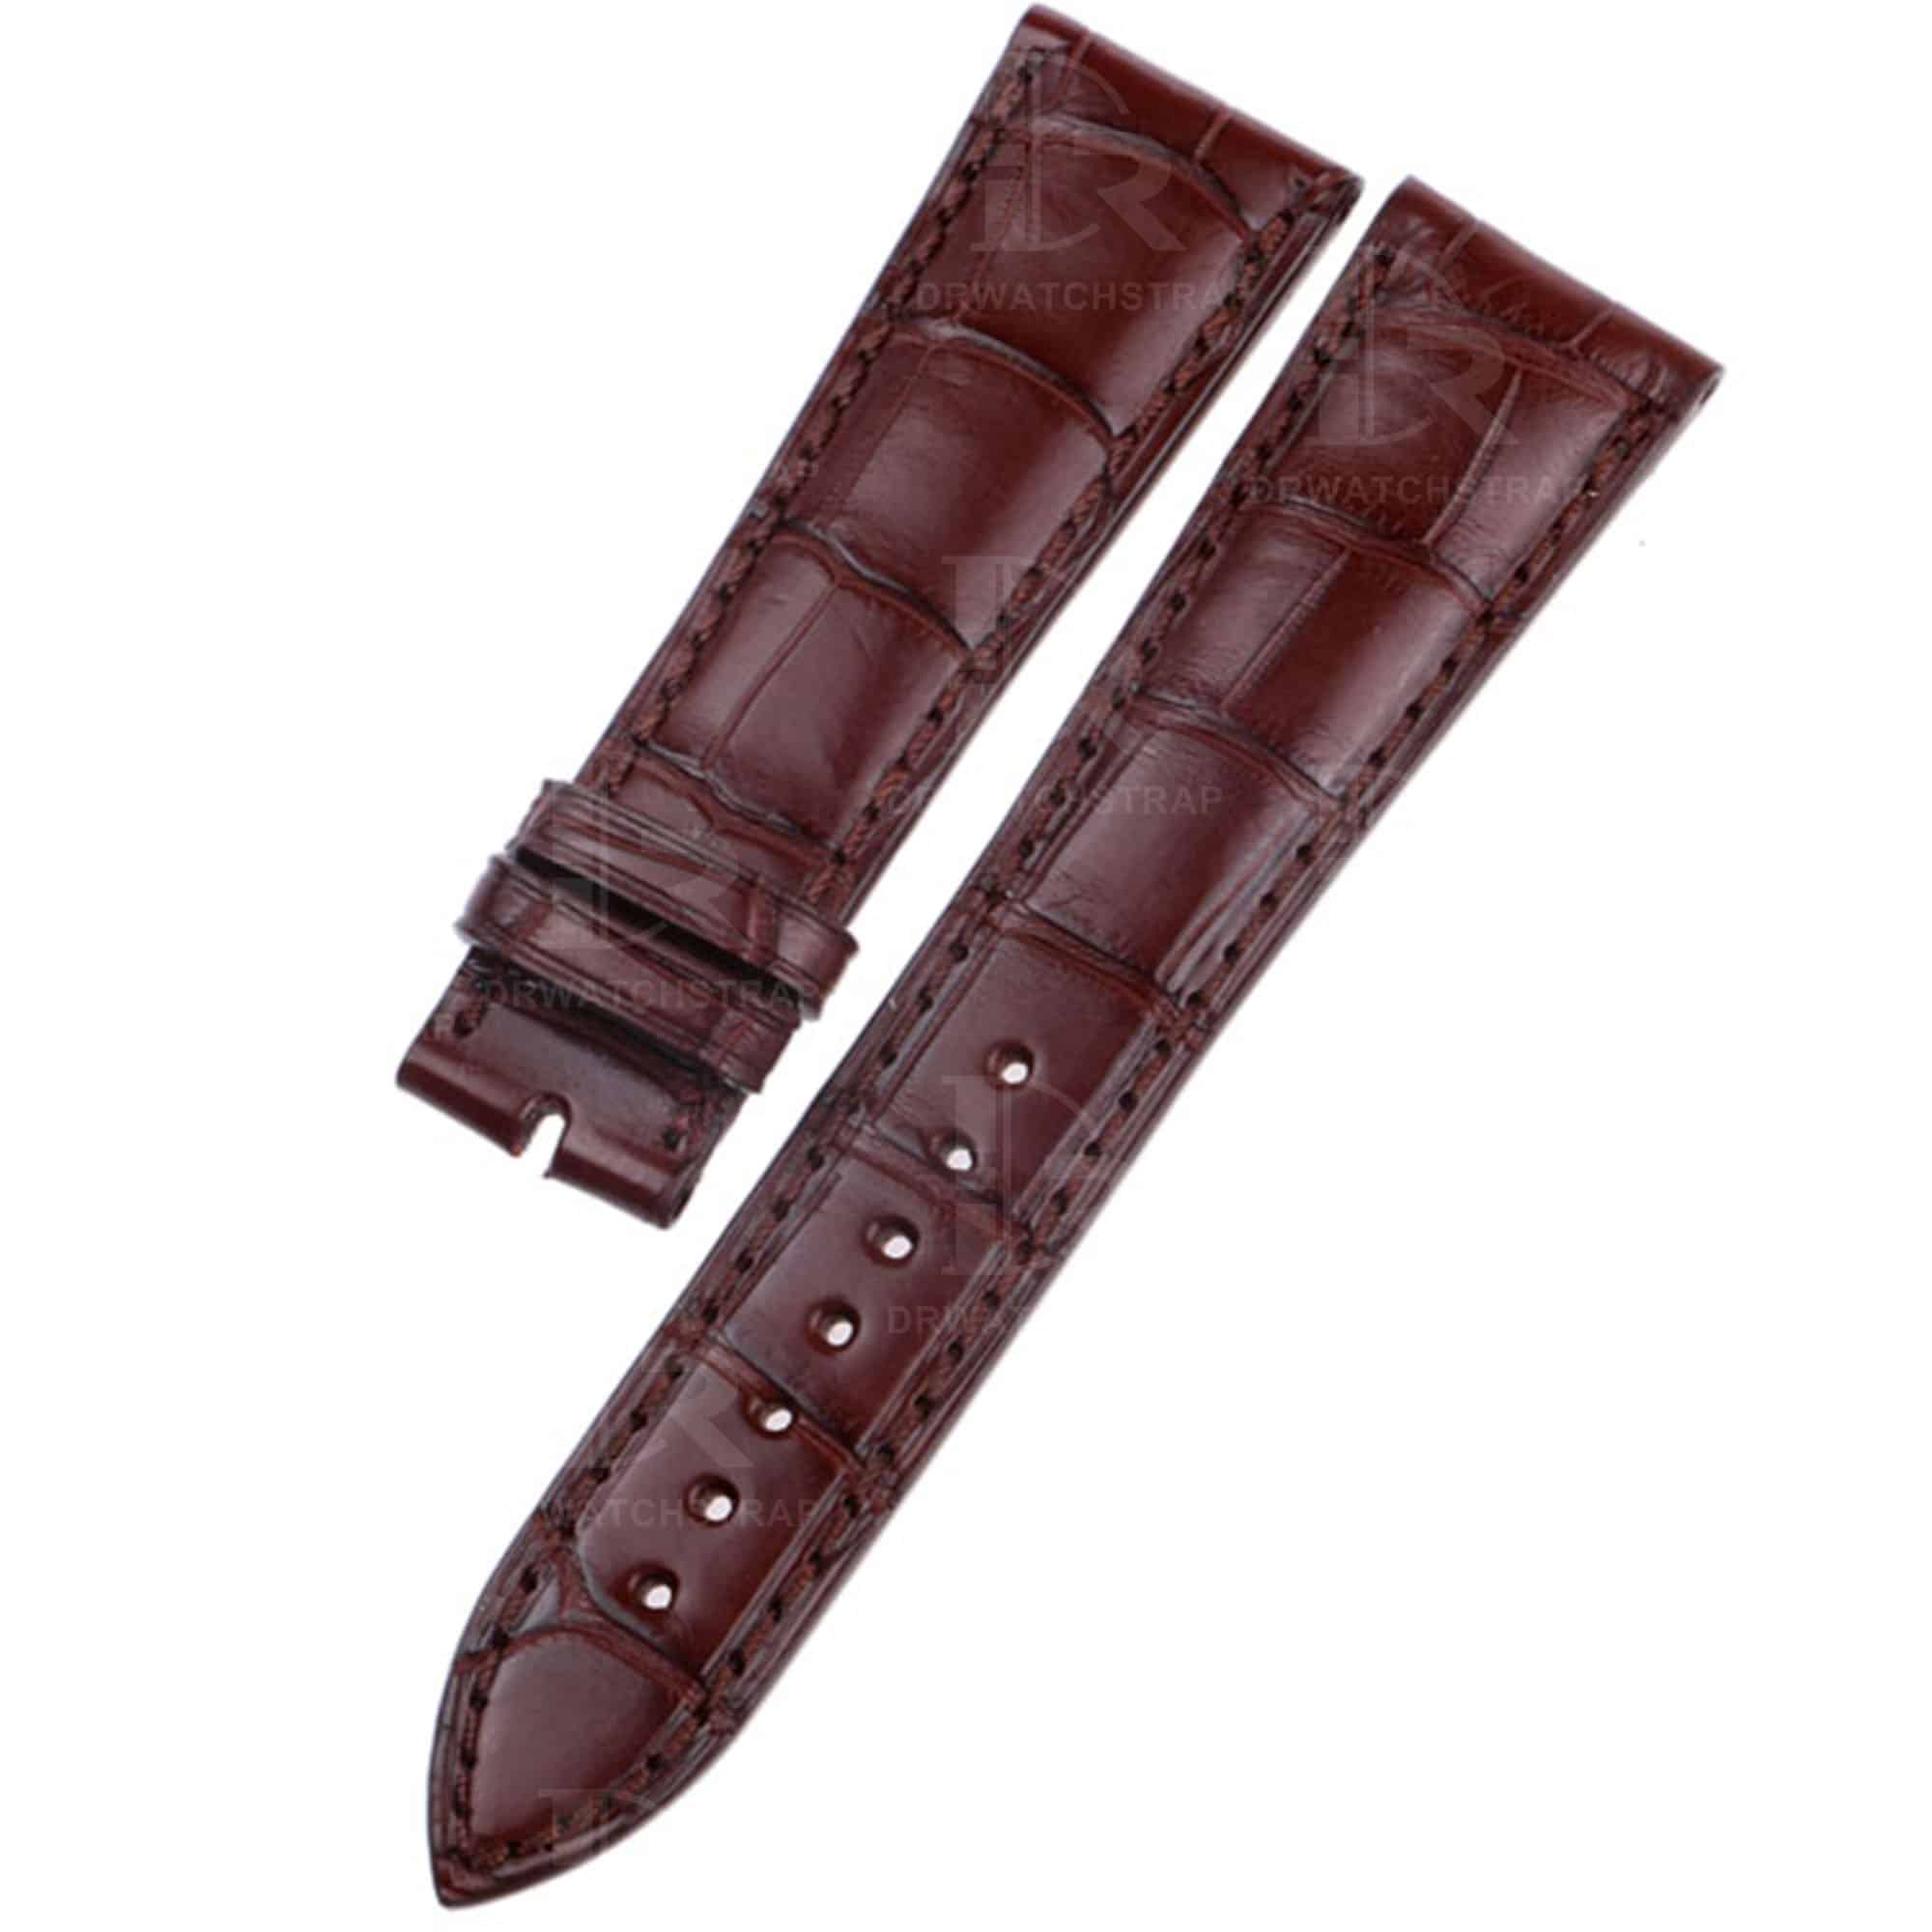 Custom Alligator crocodile handmade brown replacement Bulgari leather watch strap and watch band replacement for Bvlgari Bvlgari / Assioma